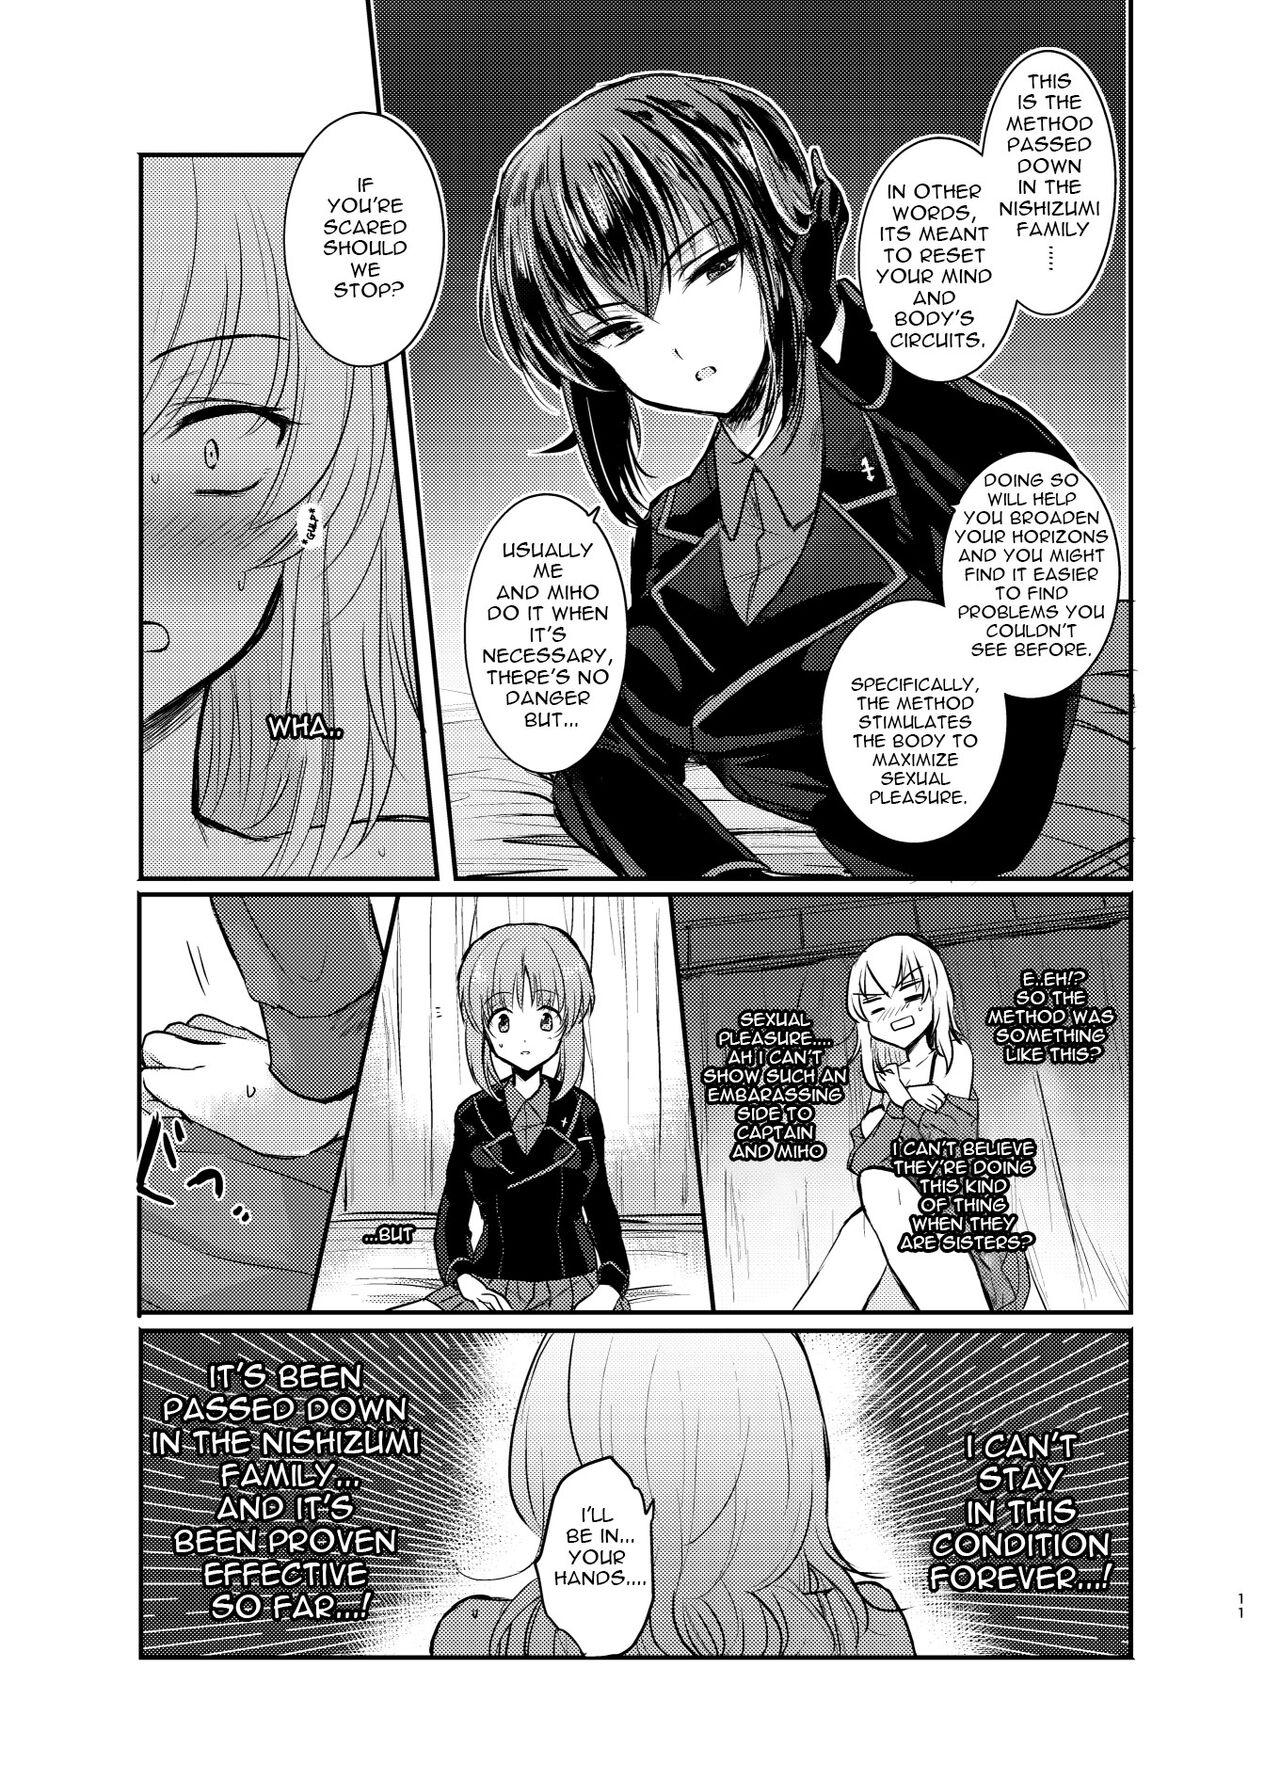 Gostoso Nishizumi Refre - Girls und panzer Naughty - Page 11